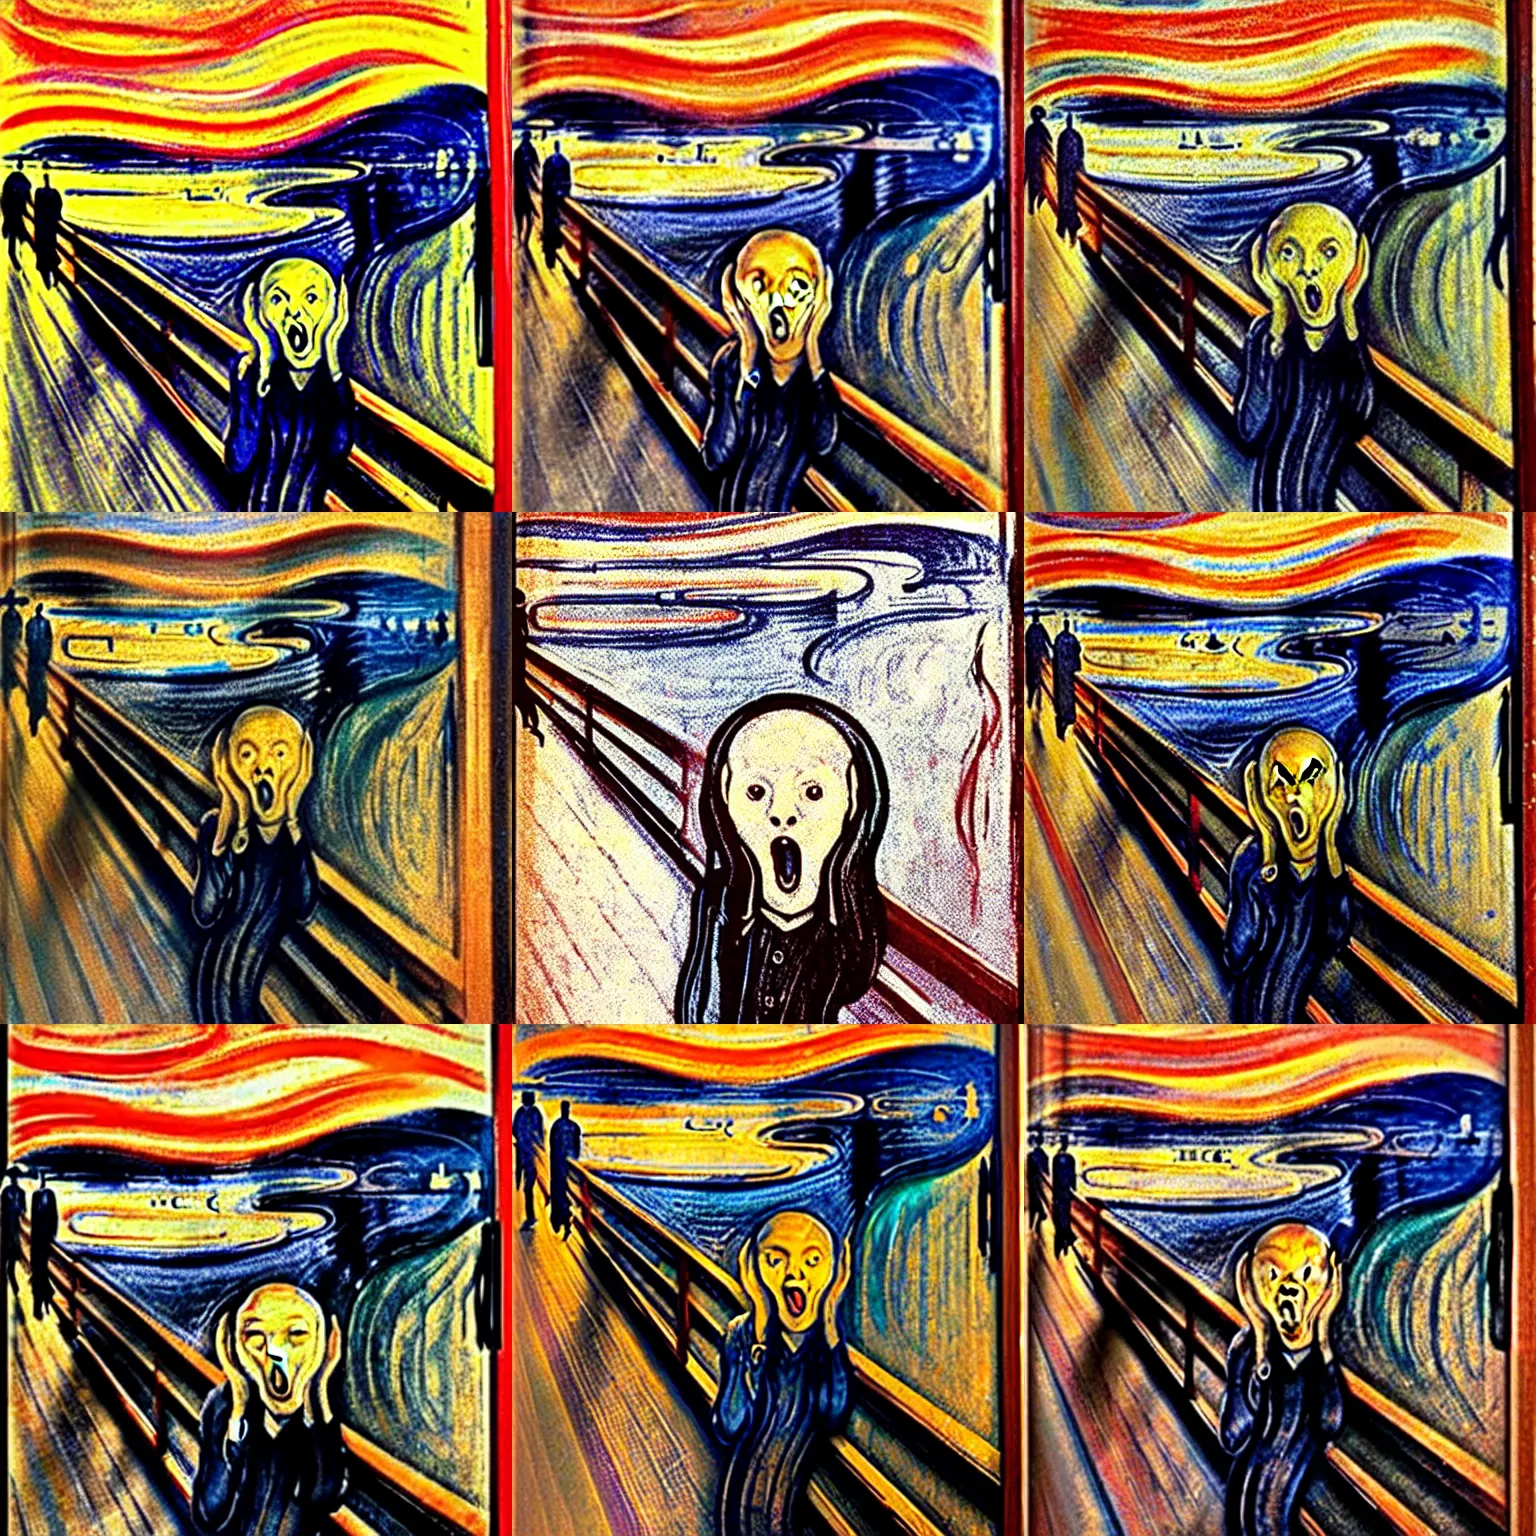 Prompt: The Scream by Leonardo da Vinci